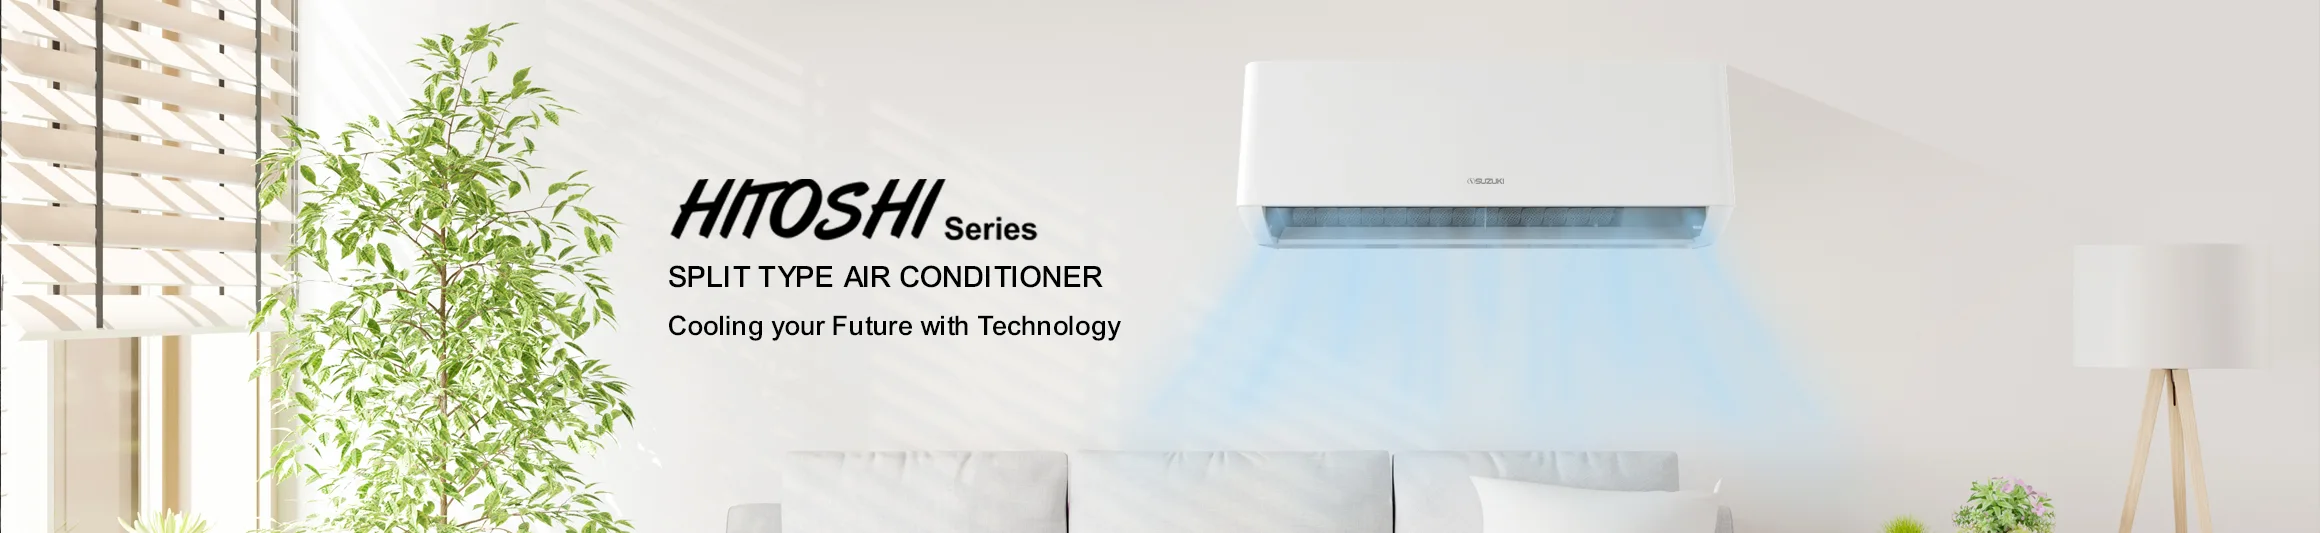 Suzuki air conditioner (Hitoshi series)